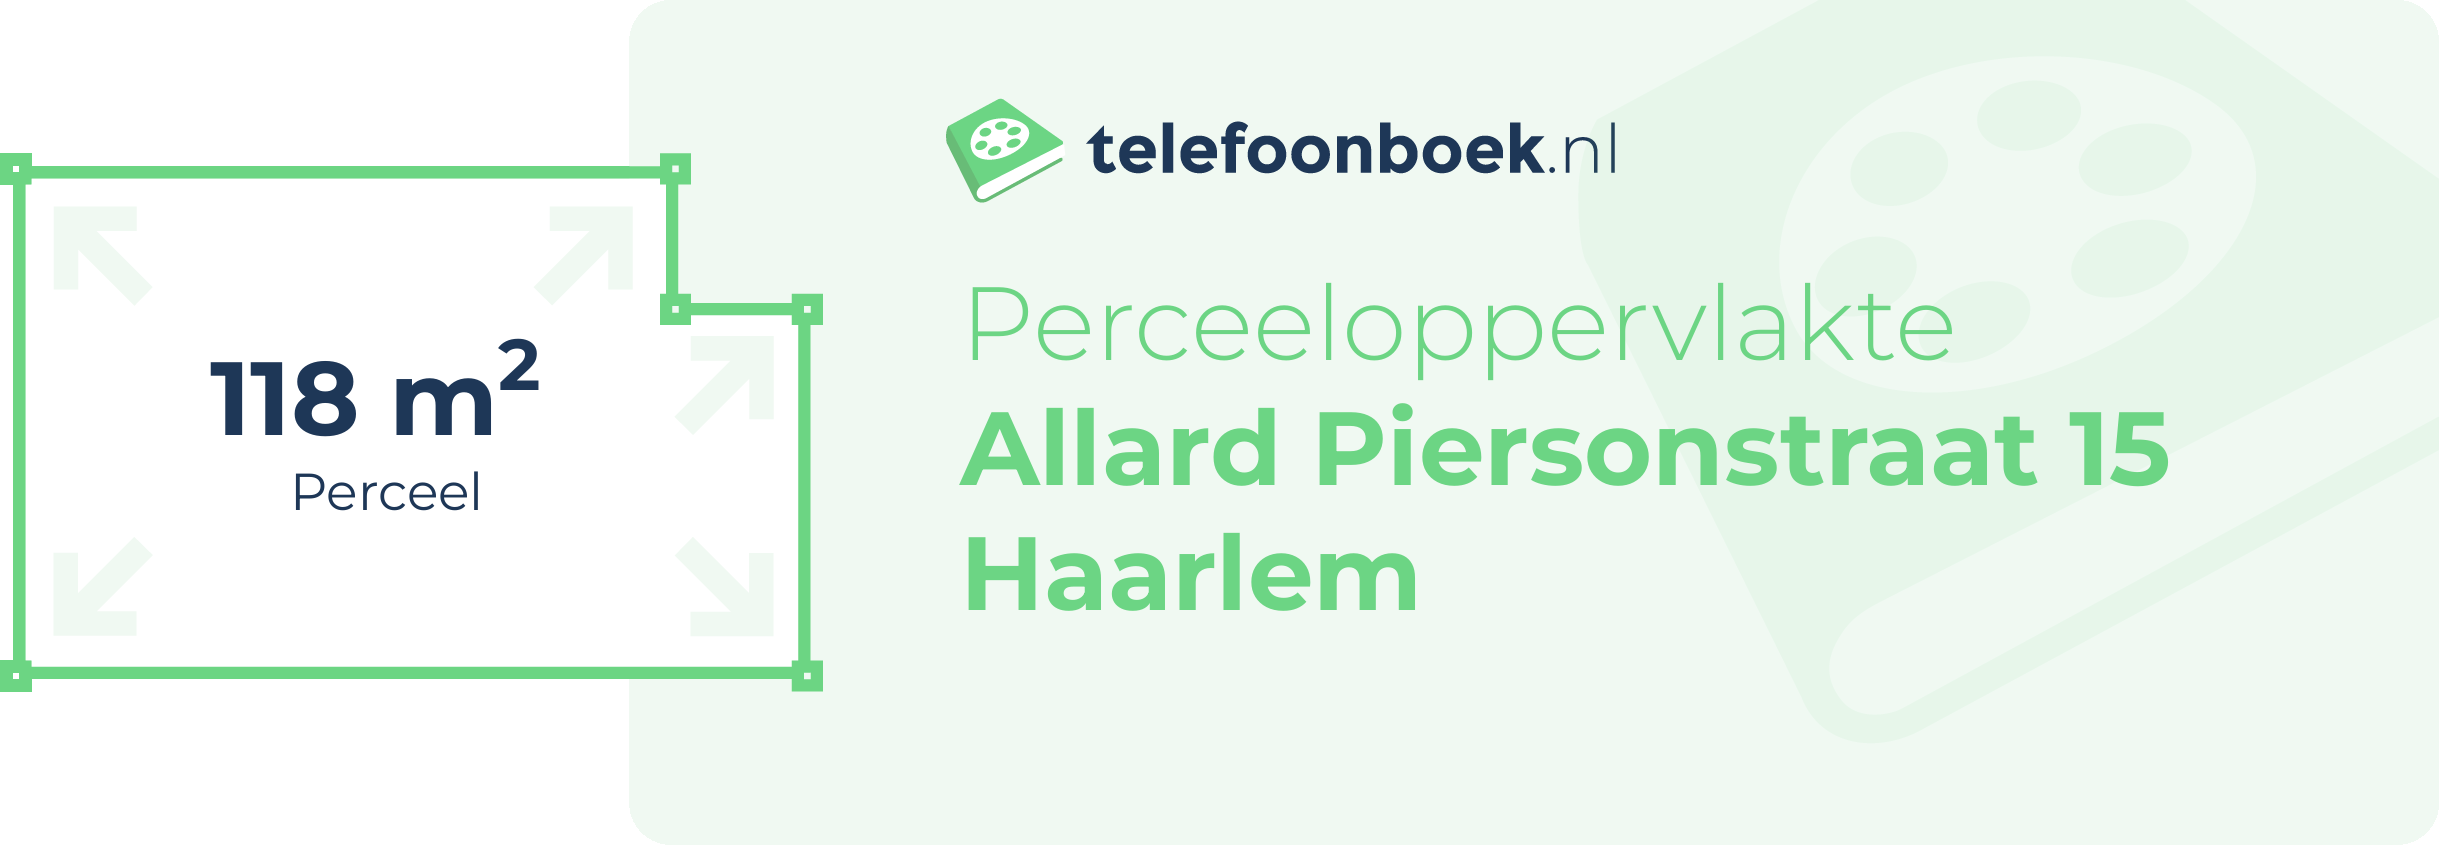 Perceeloppervlakte Allard Piersonstraat 15 Haarlem